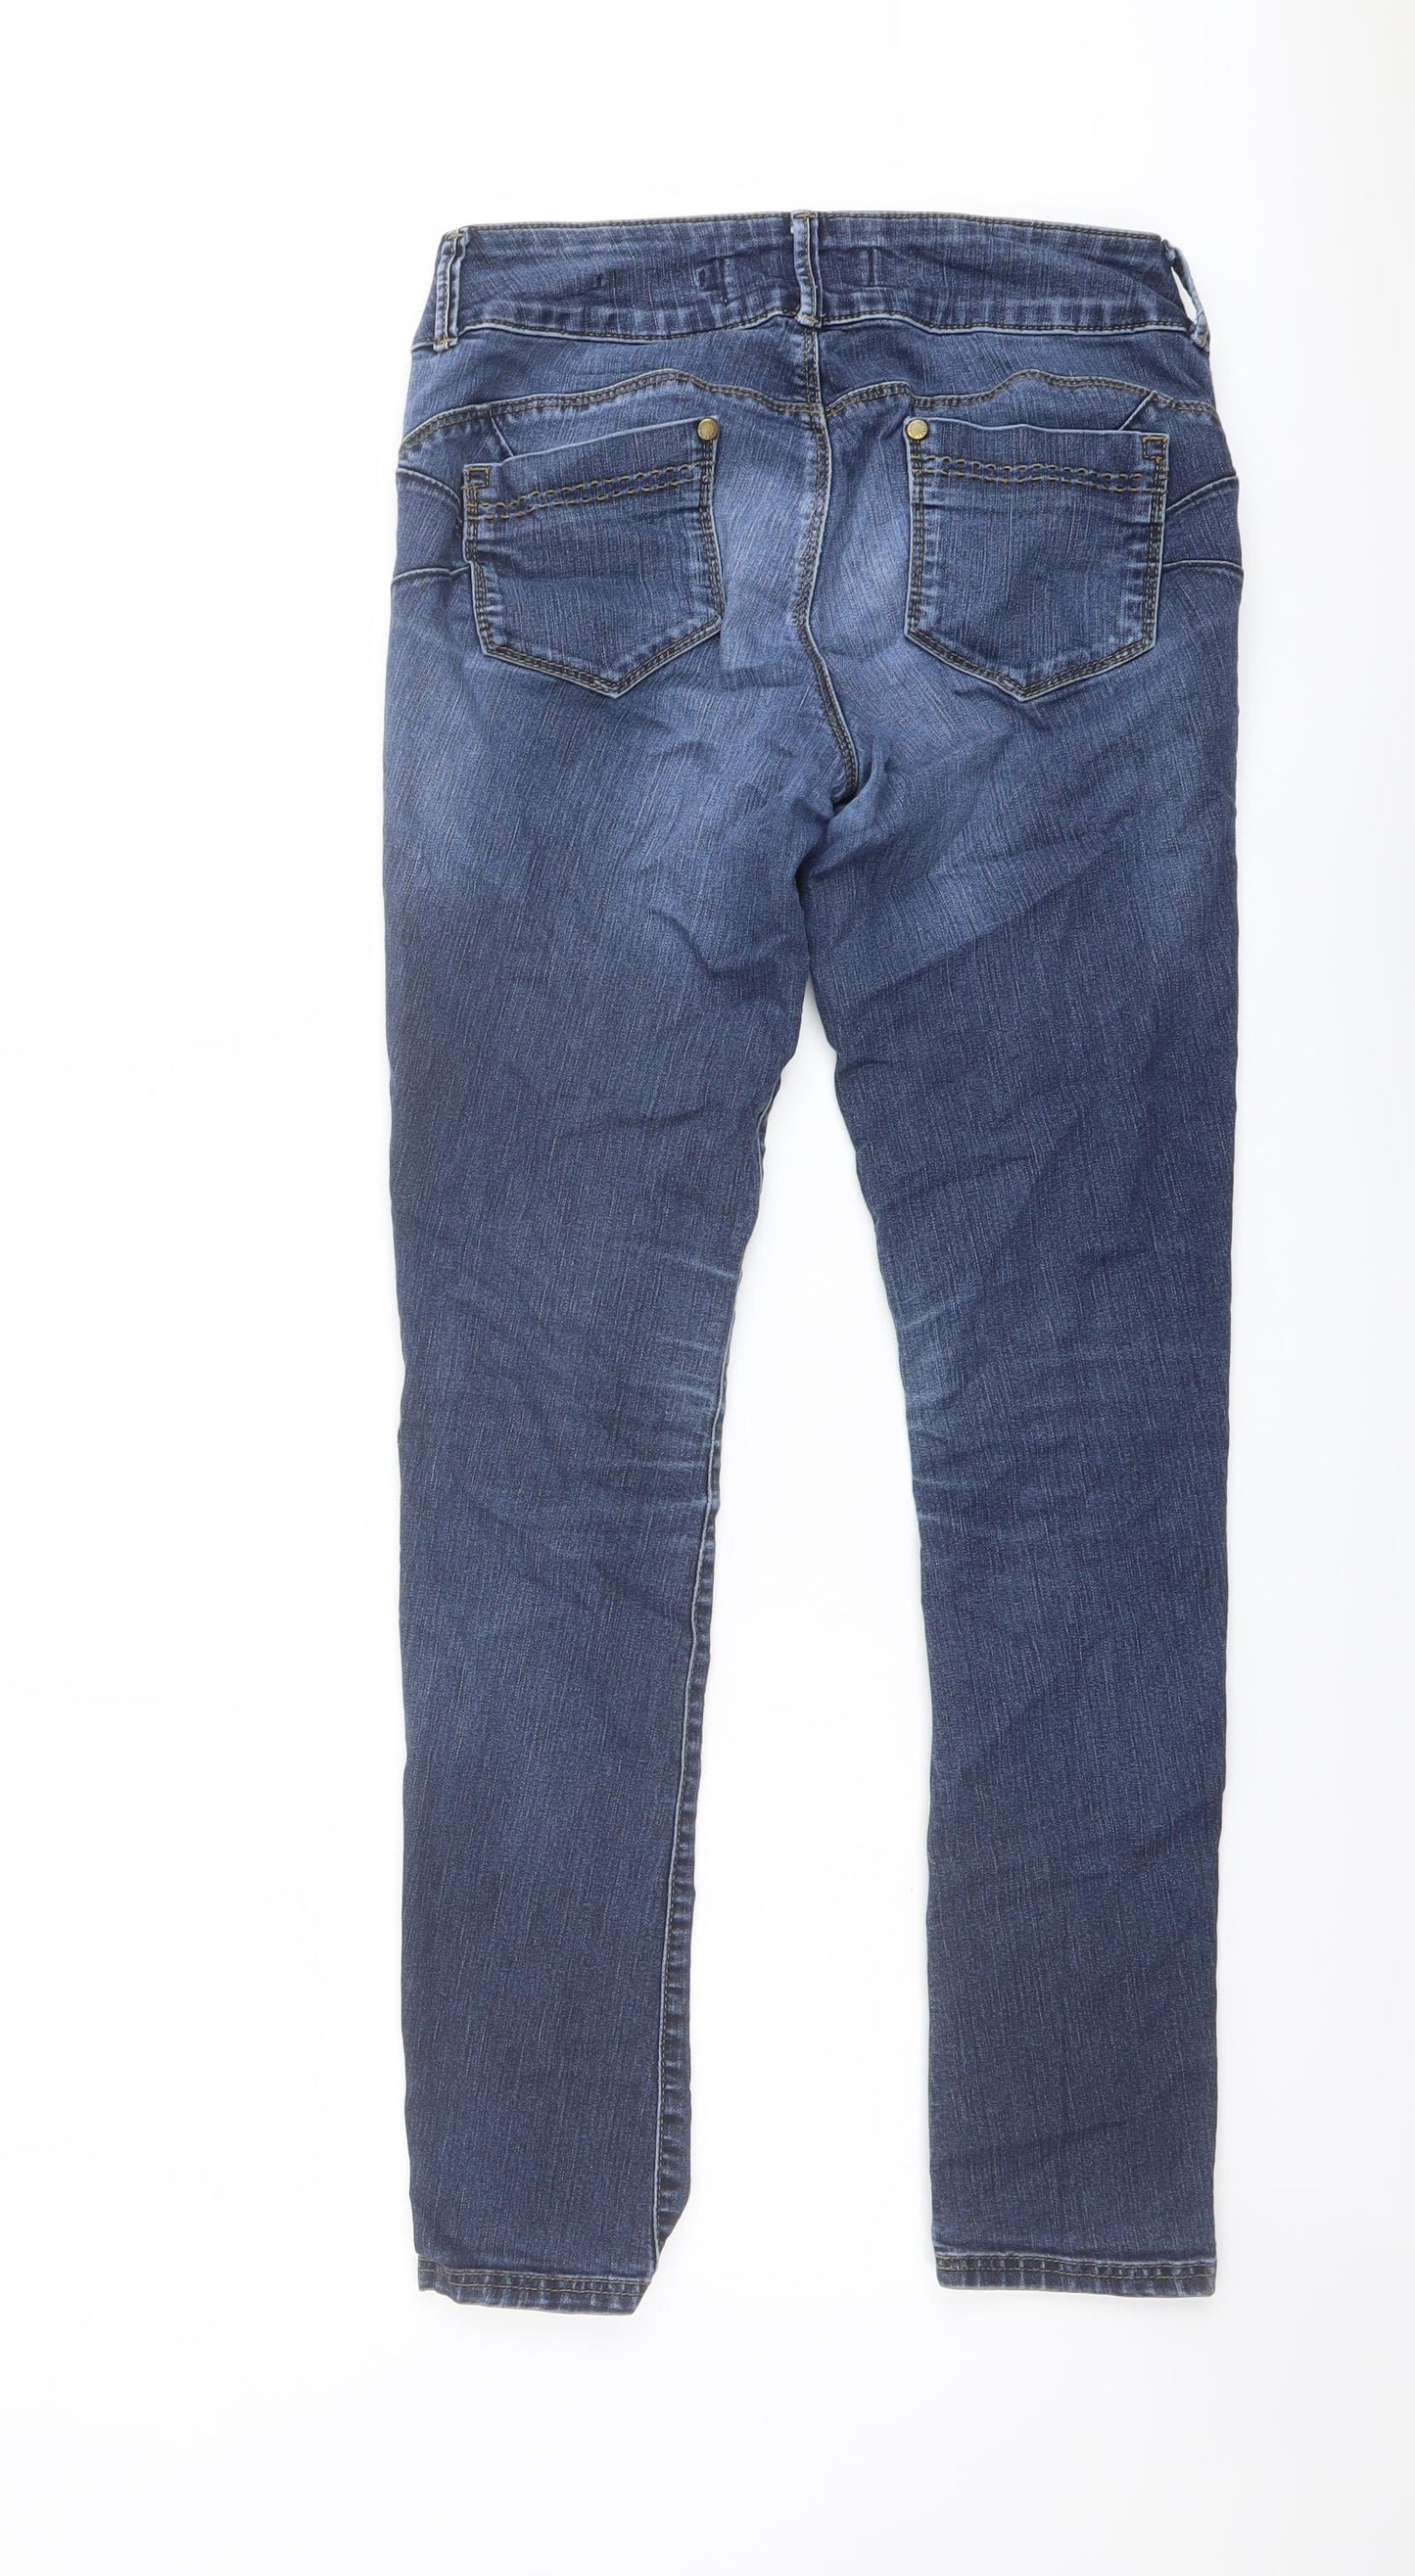 Jasper Conran Womens Blue Cotton Skinny Jeans Size 10 L28 in Regular Button